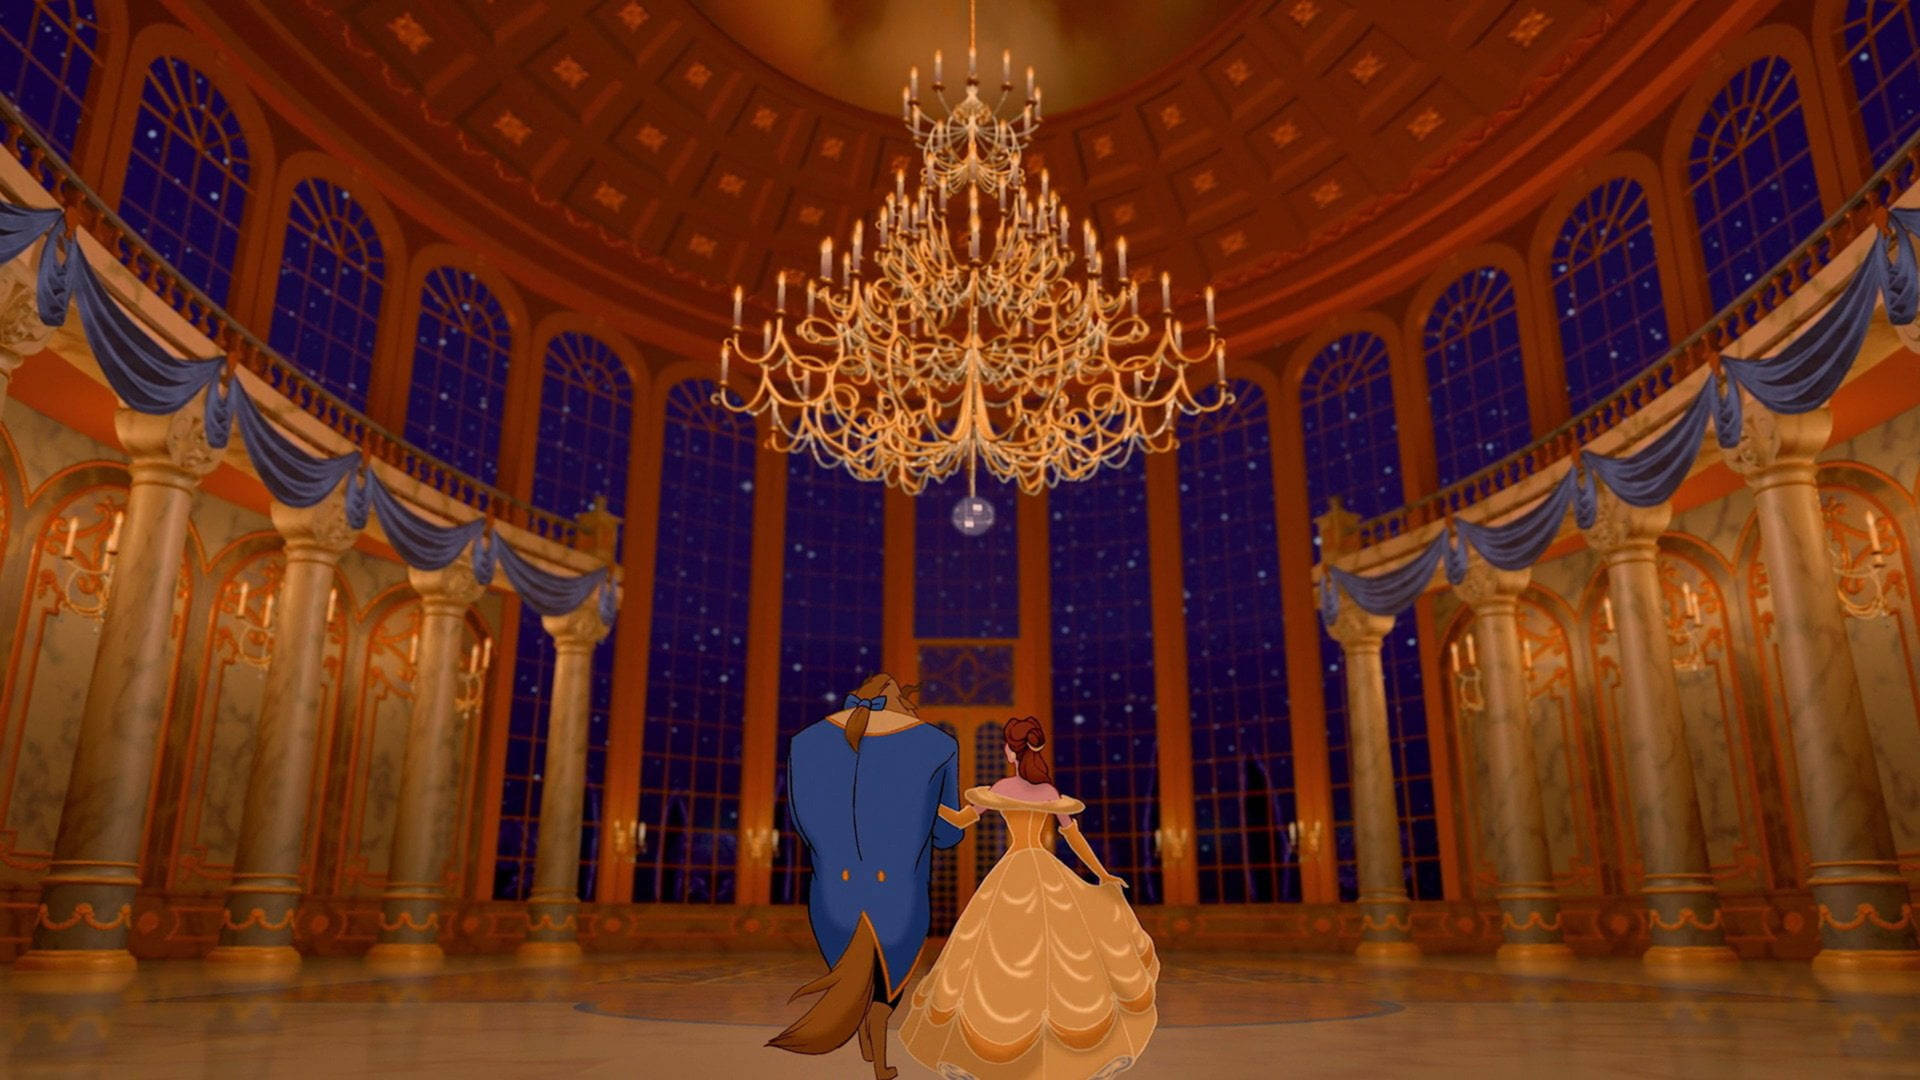 2560x1440 Disney Beauty And The Beast Dance Wallpaper